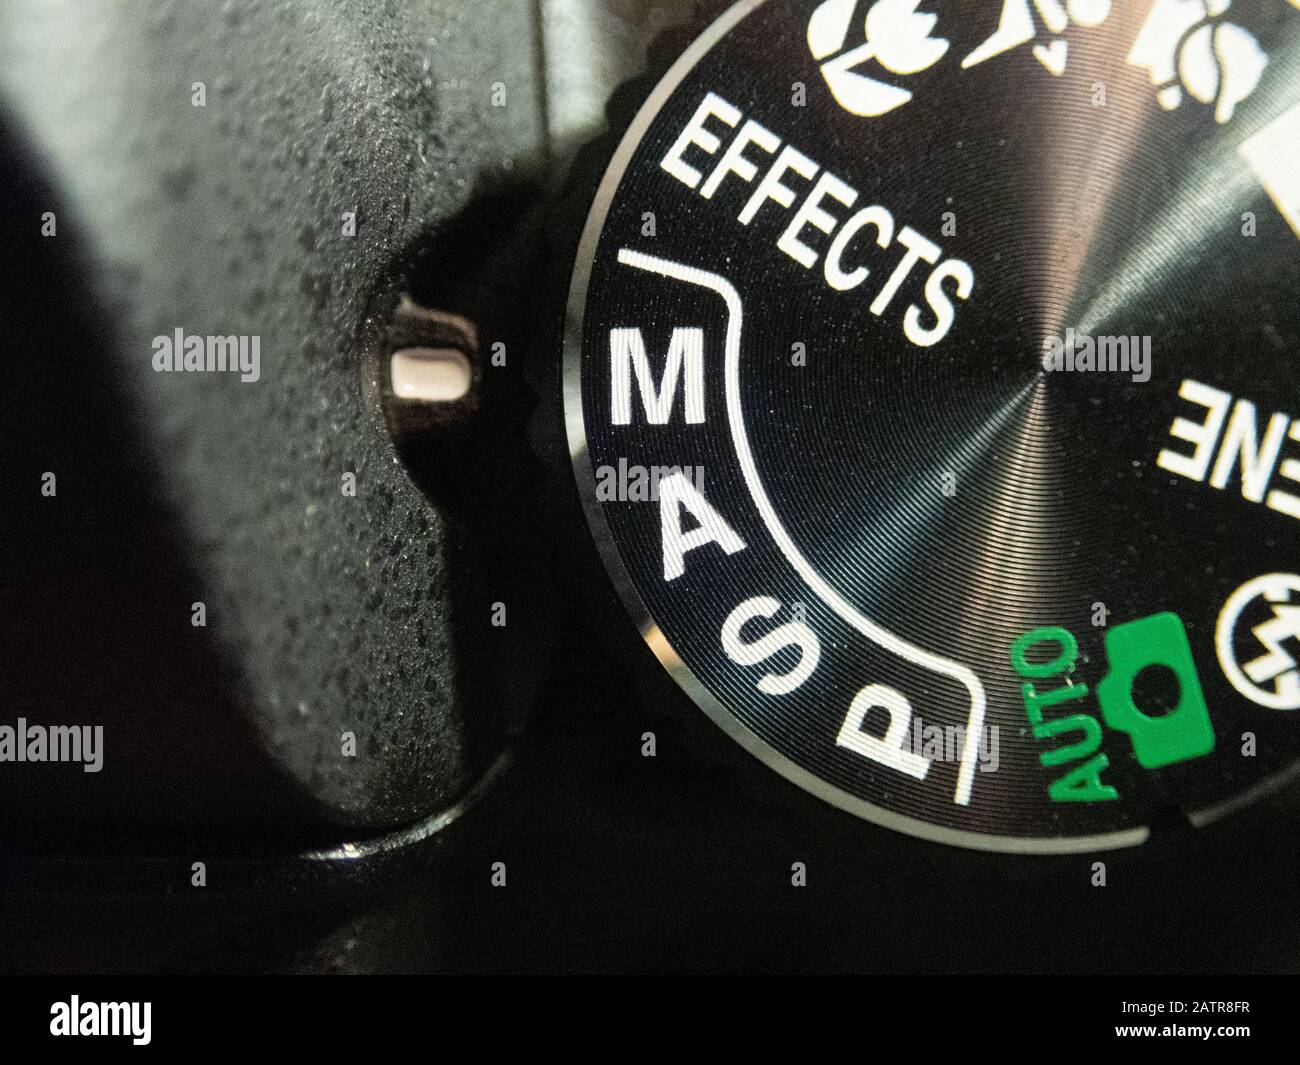 Bukarest/Rumänien - 24. Juli 2019: Makro eines Nikon DSLR-Kamera-Moduswählers im manuellen Modus aktiviert. Stockfoto